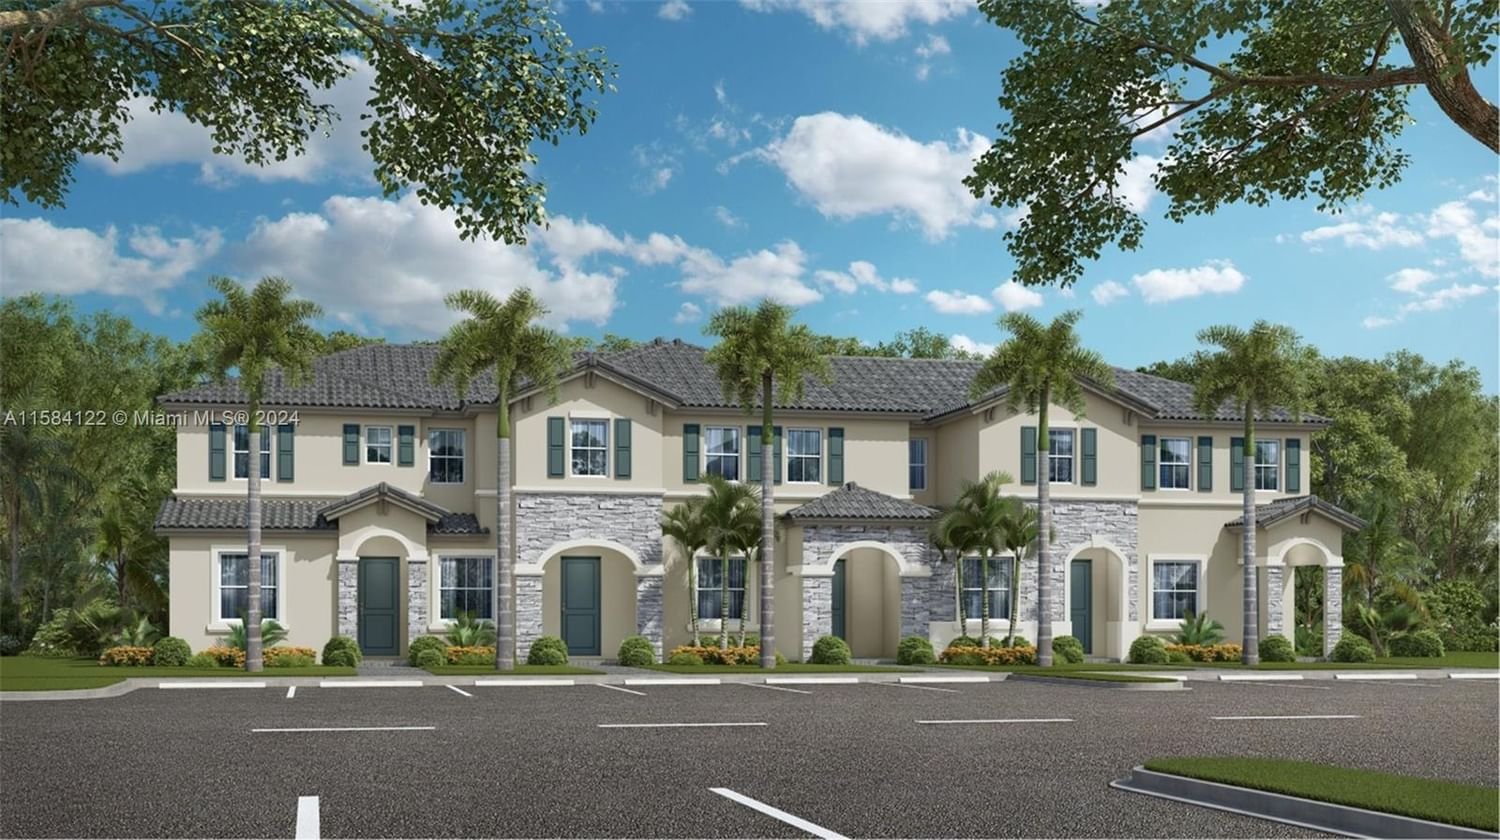 Real estate property located at 29253 163 CT, Miami-Dade County, Cedar Pointe, Homestead, FL